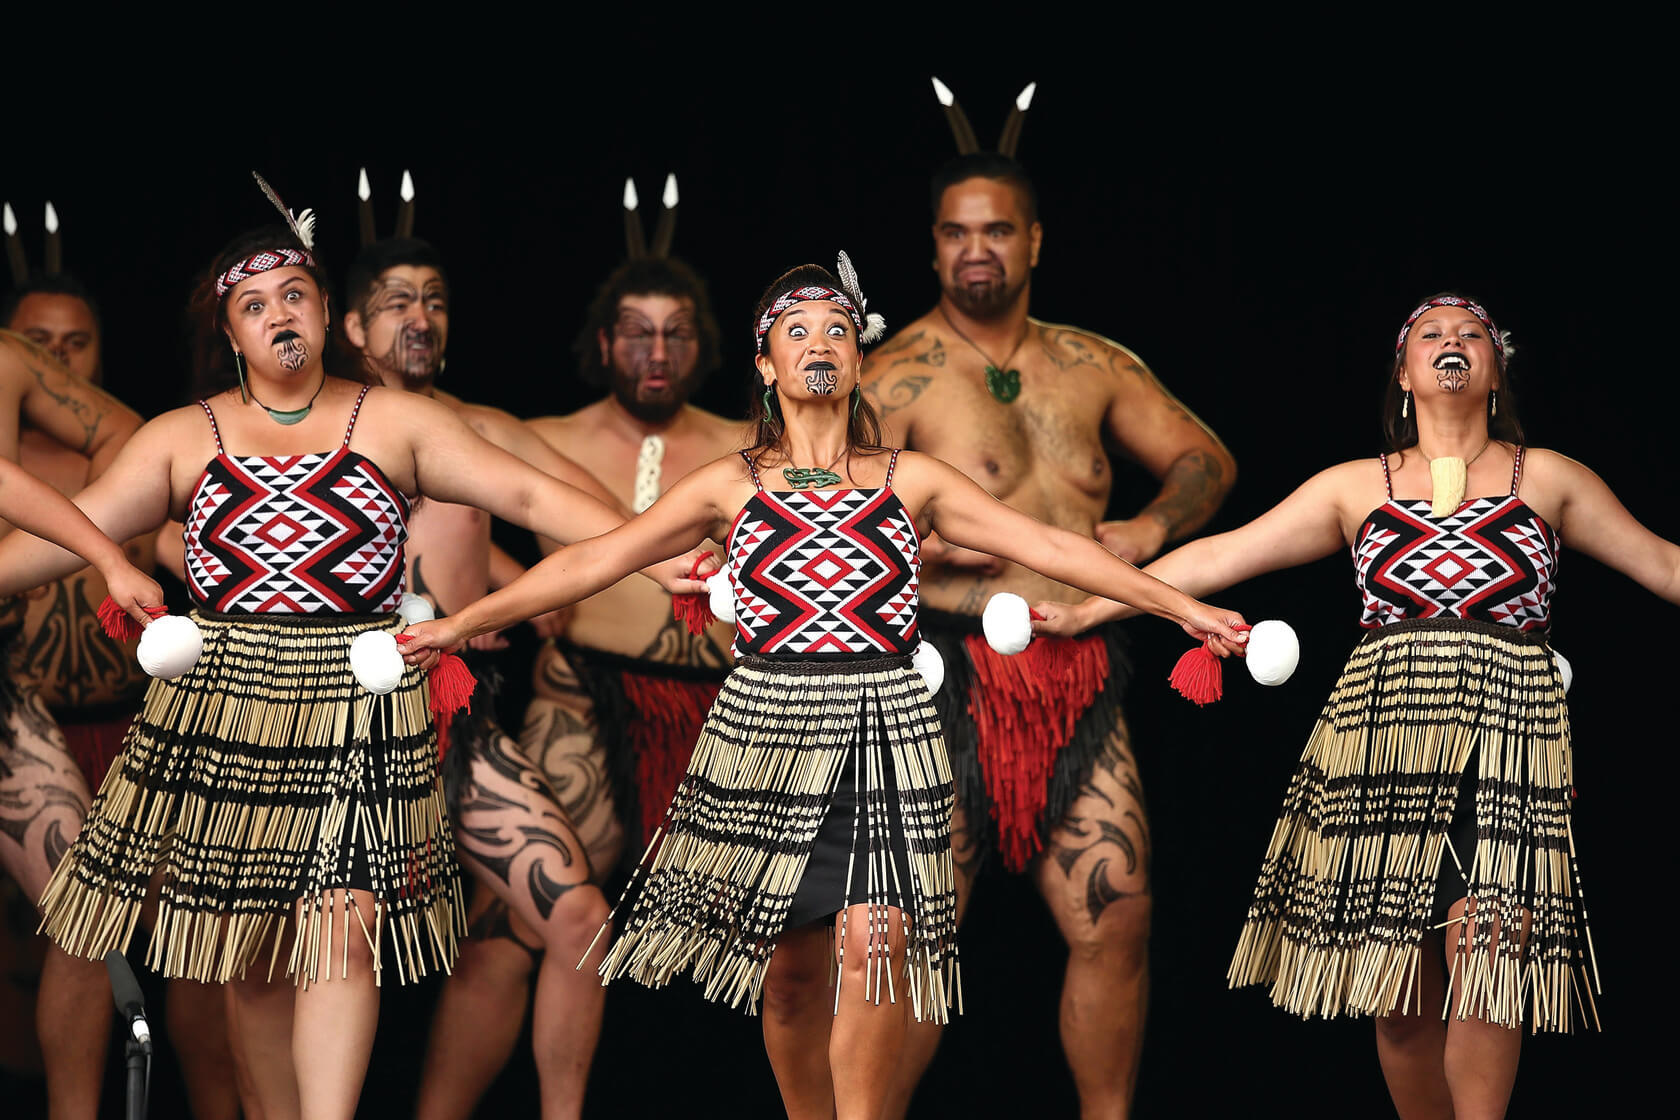 New zealand traditions. Маори танец хака. Танец Haka новая Зеландия. Хака танец новой Зеландии. Национальный костюм Маори новой Зеландии.